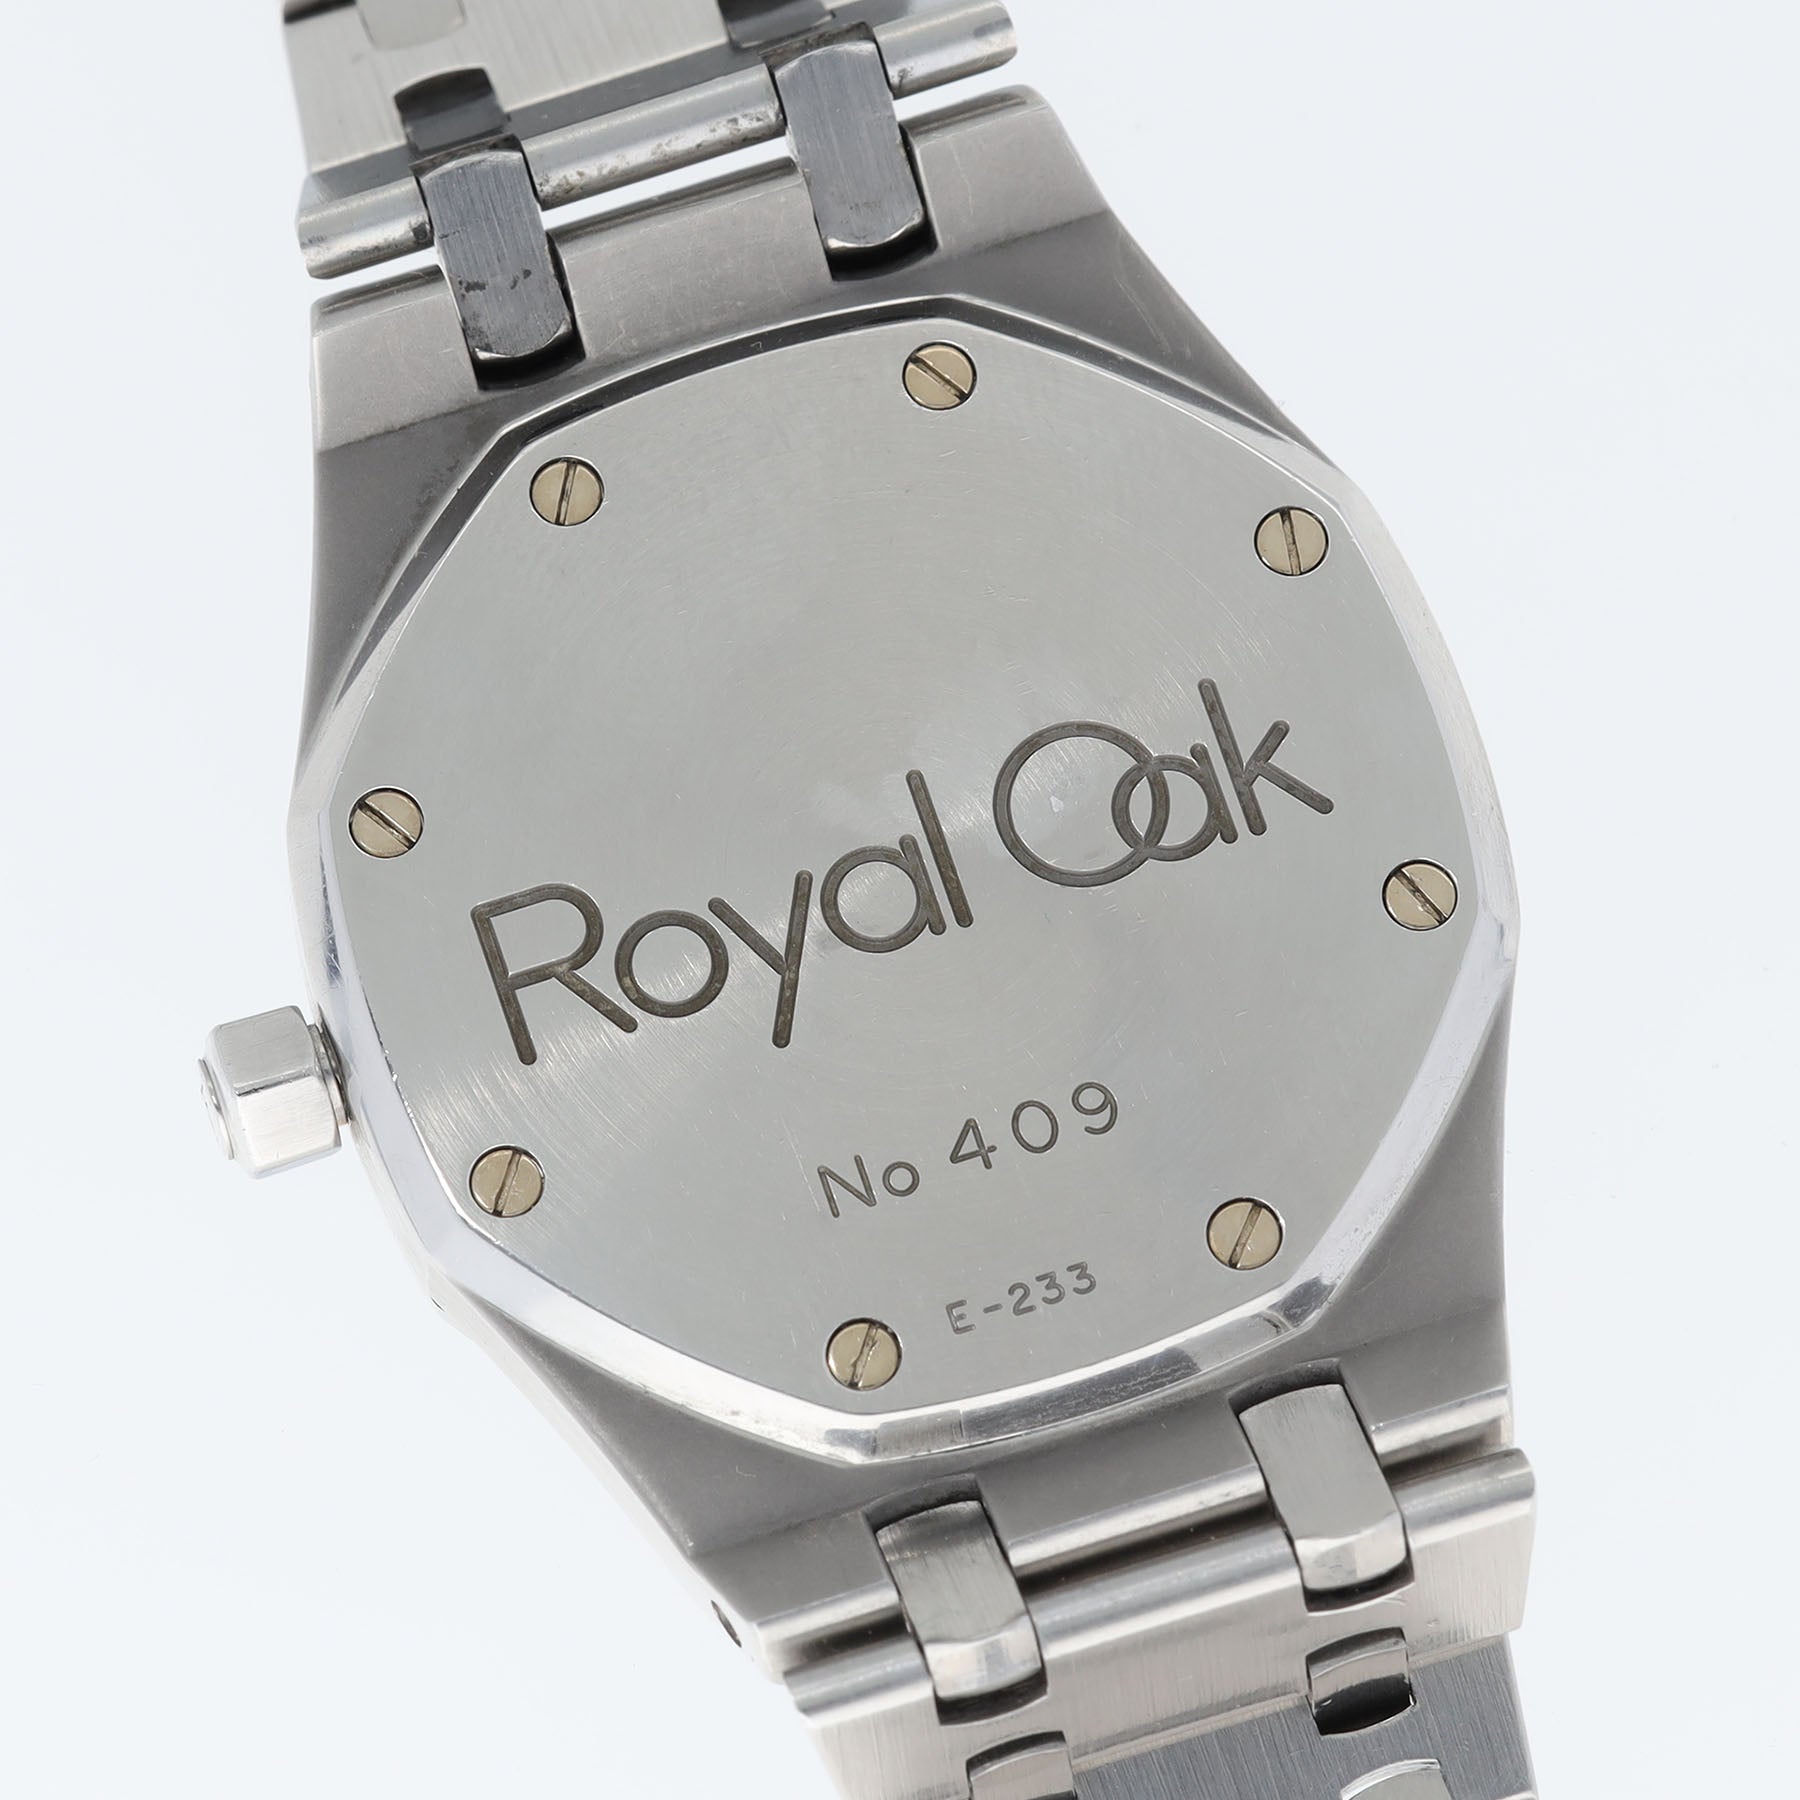 Audemars Piguet Royal Oak 14790ST Tropical dial with Original Guarantee Paper